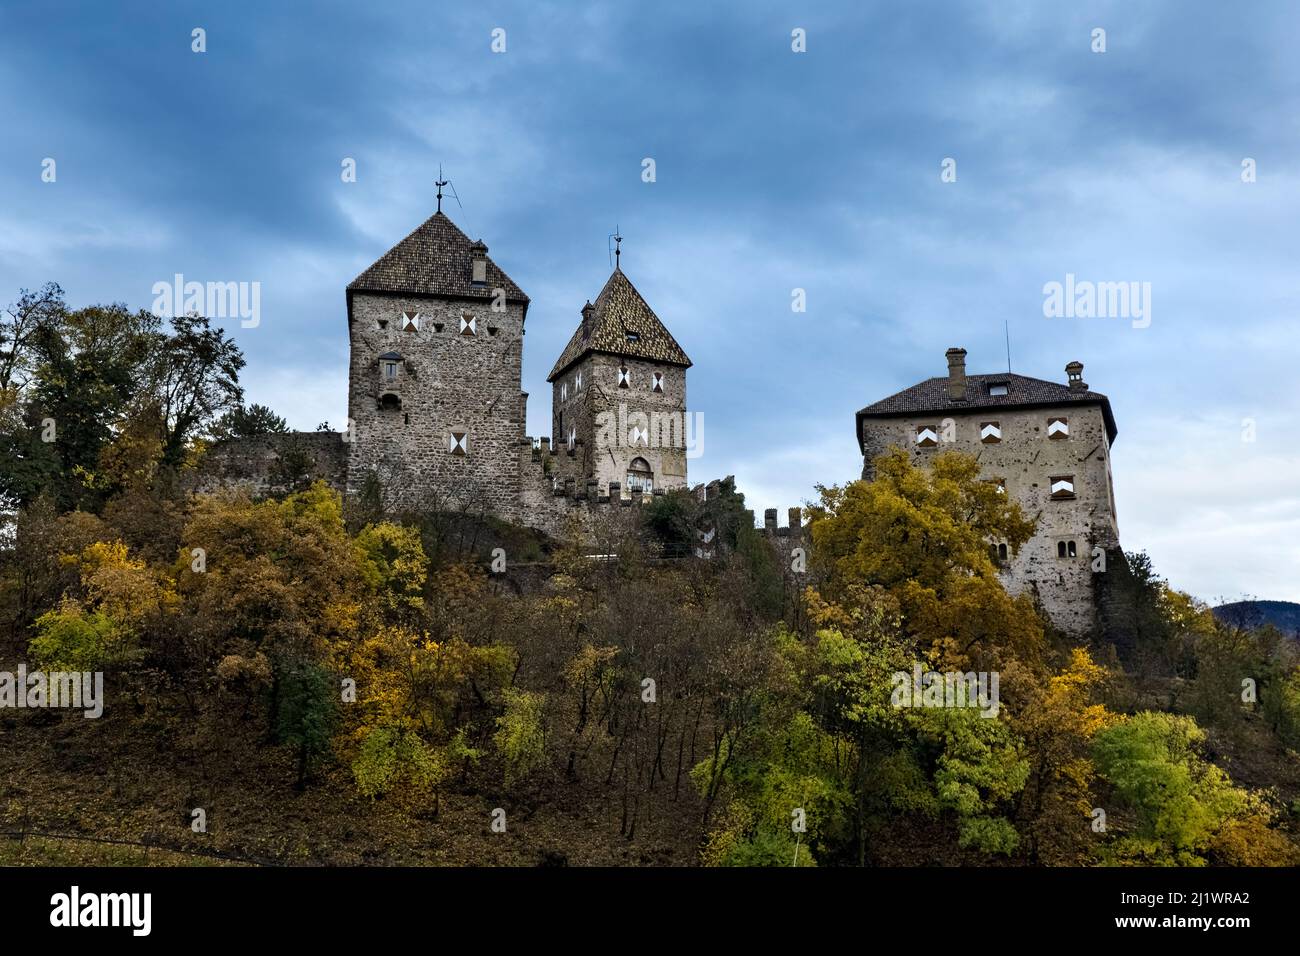 The medieval Wehrburg Castle has the rare characteristic of having two keep. Tisens/Tesimo, Bolzano province, Trentino Alto-Adige, Italy, Europe. Stock Photo